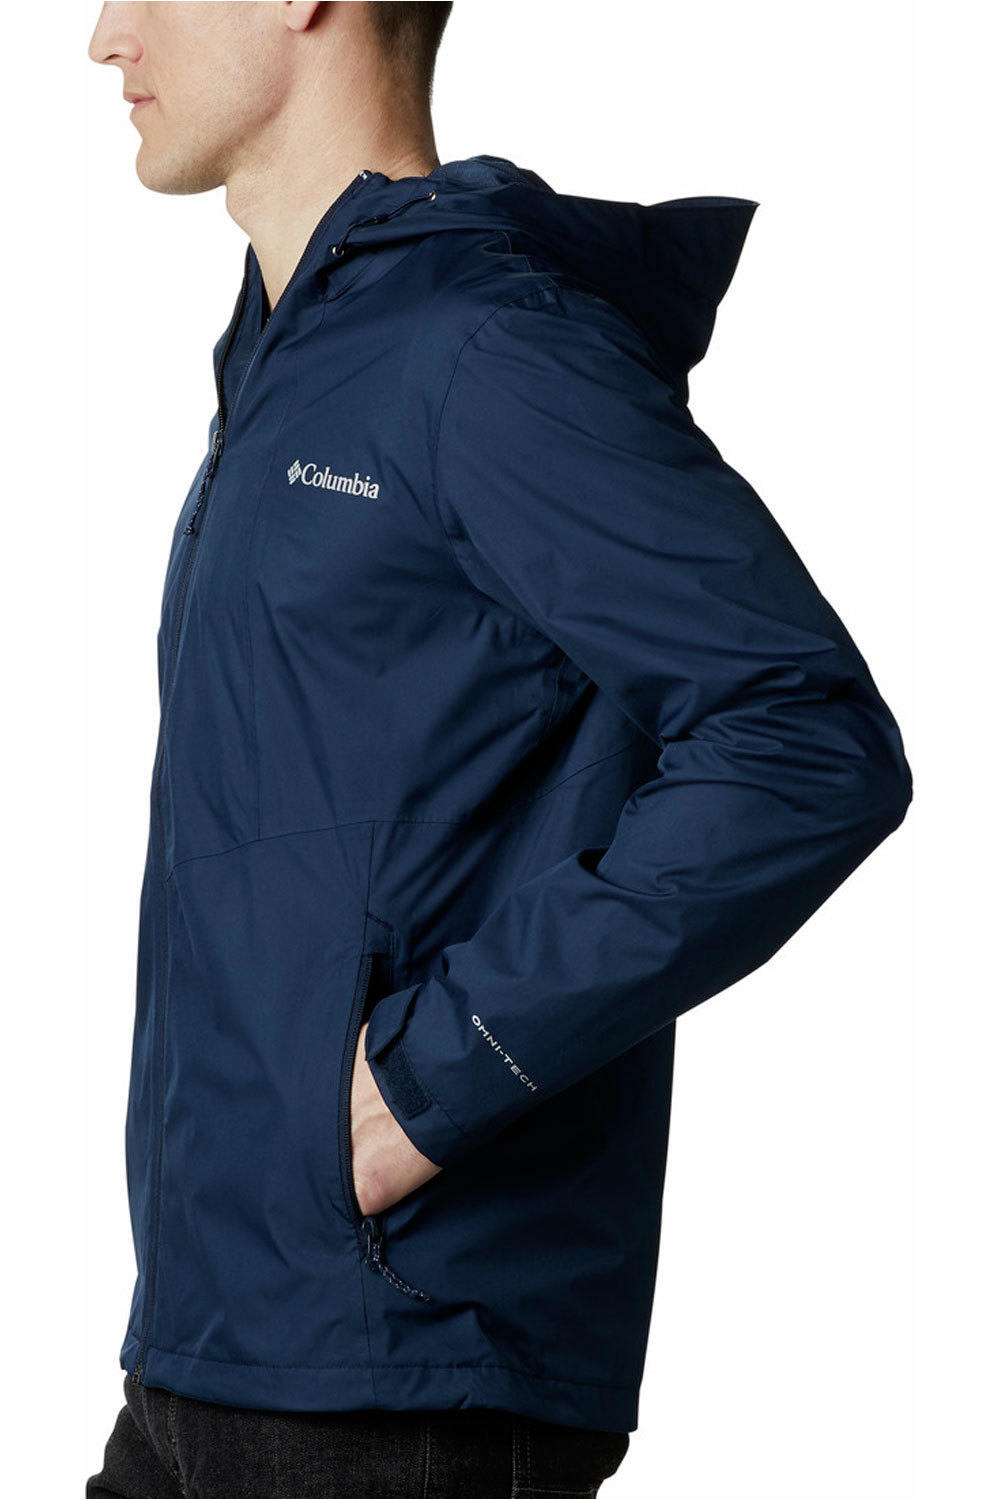 Columbia chaqueta impermeable insulada hombre Inner Limits II Jacket vista detalle